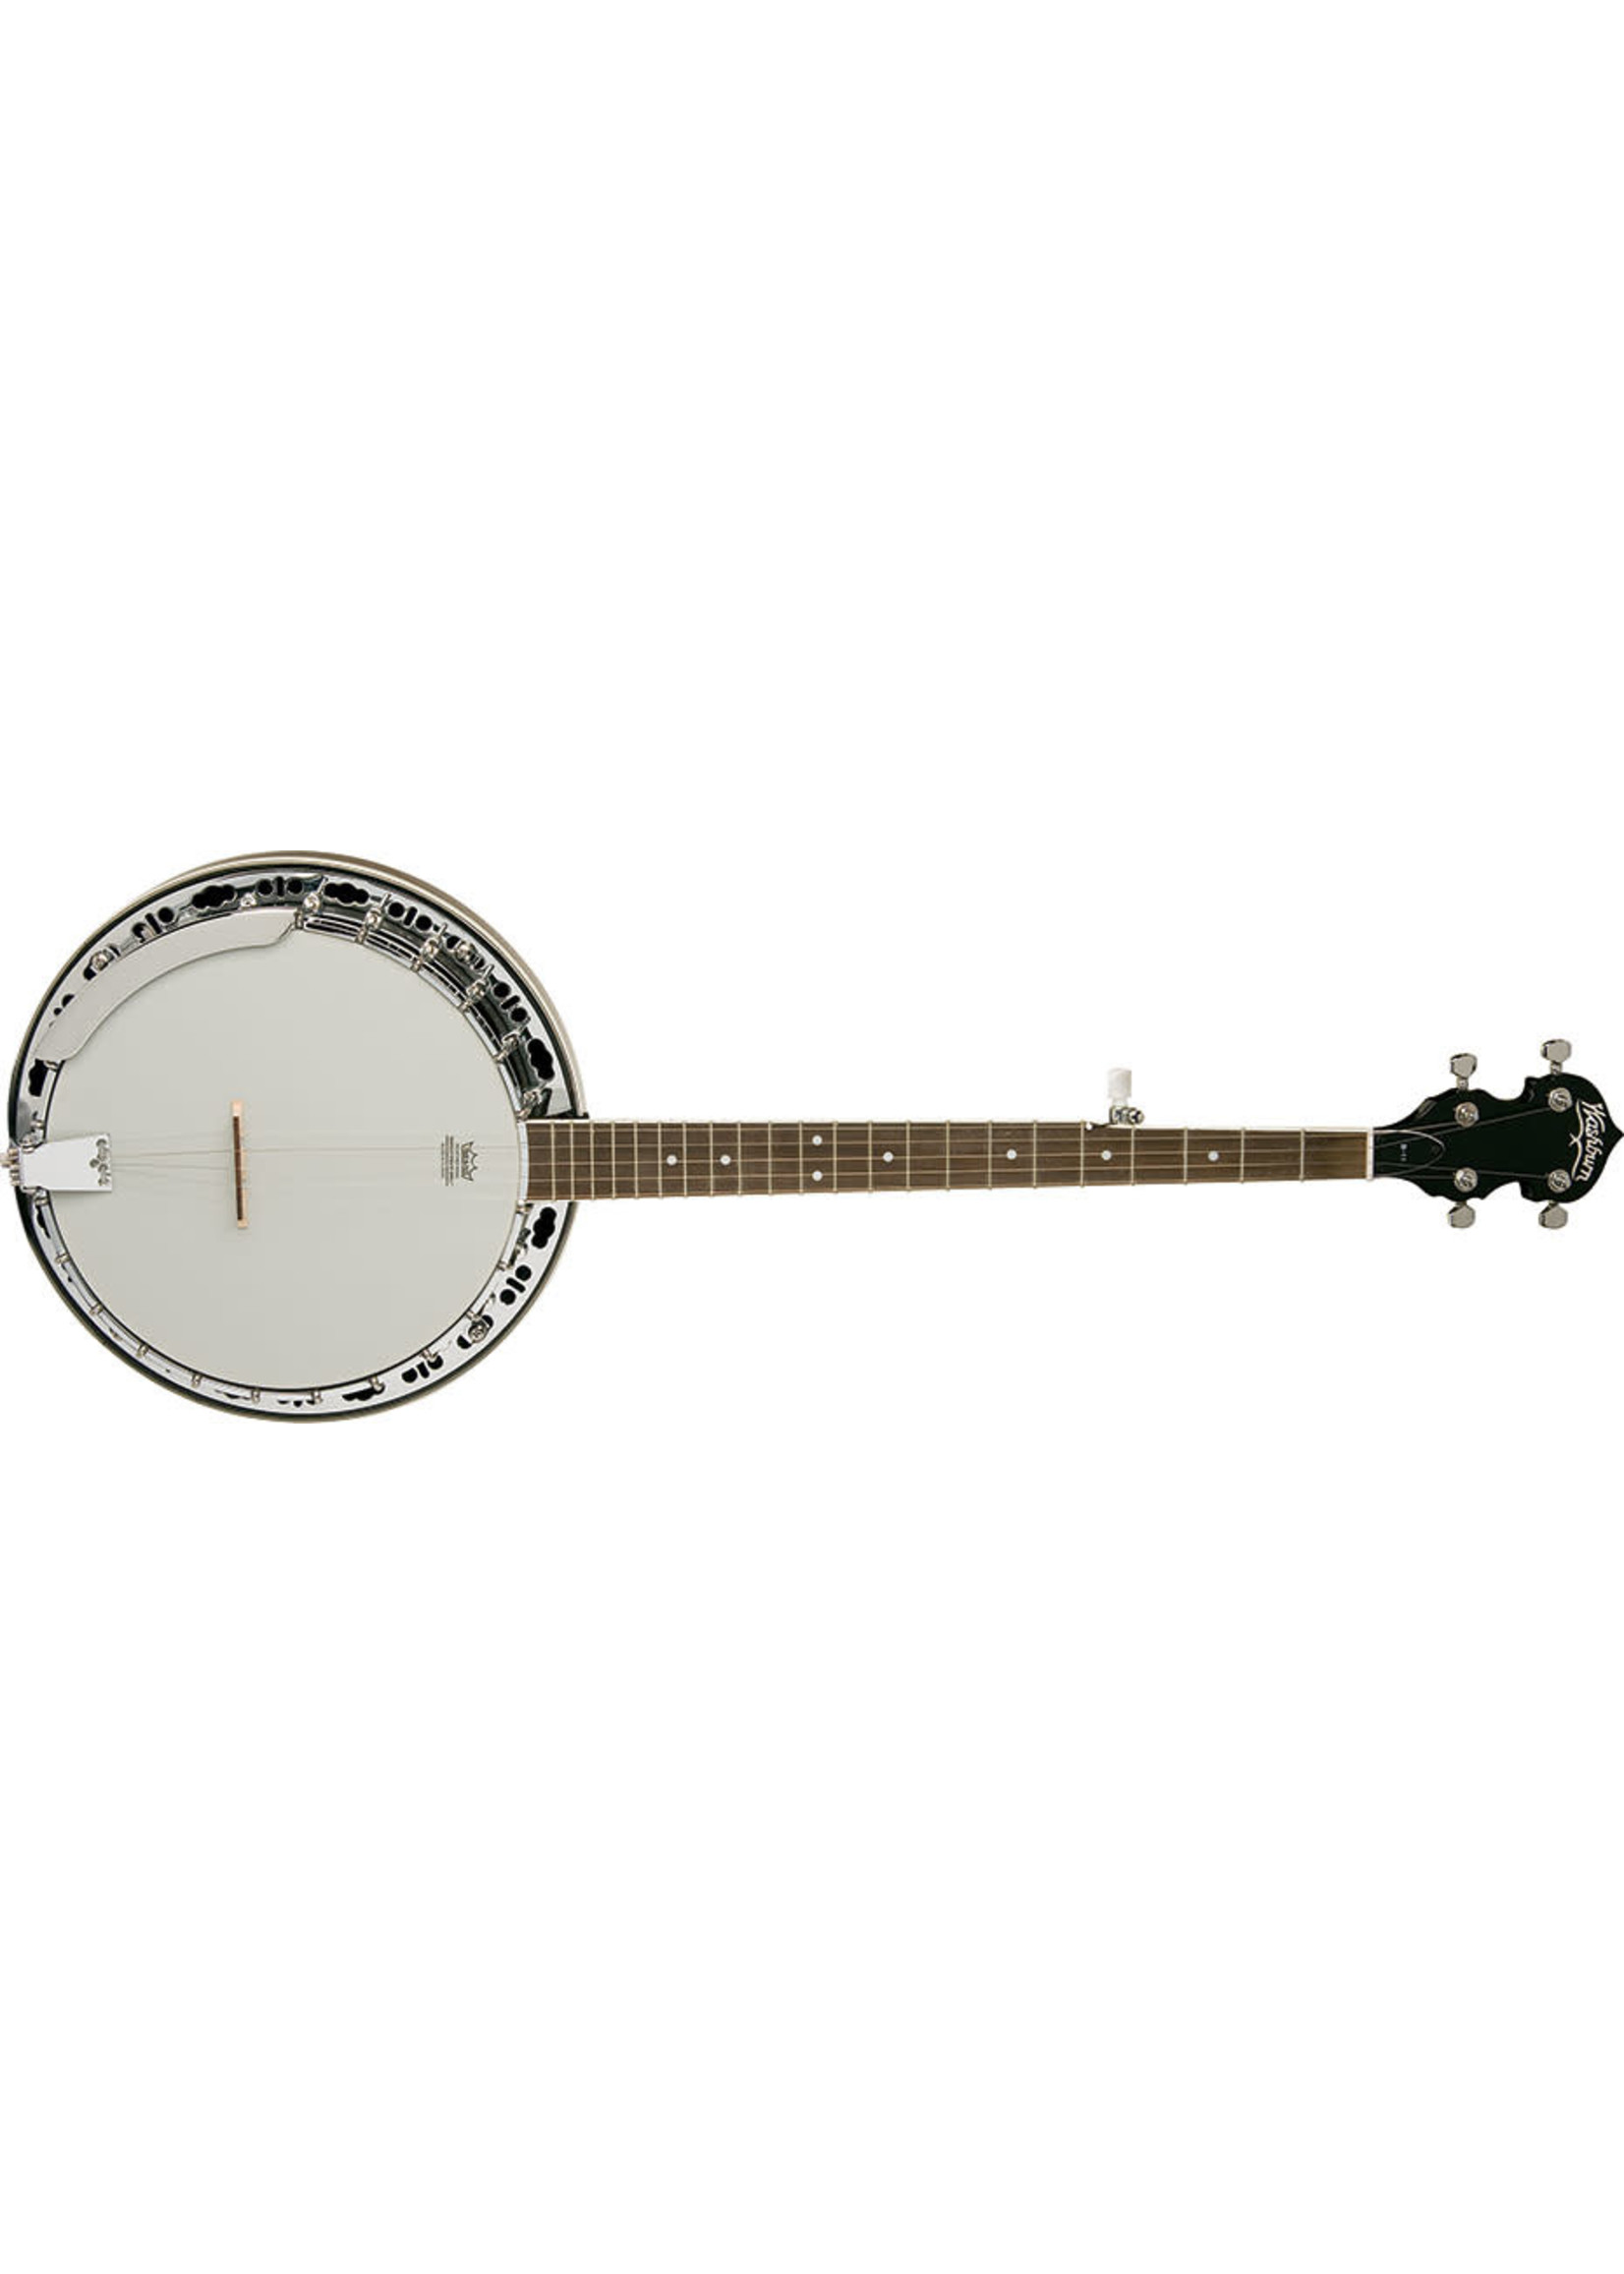 Washburn Washburn Banjo Americana Series 5-String Resonator w/ Rolled Brass Tone Ring B11K-A w/ Hard Case